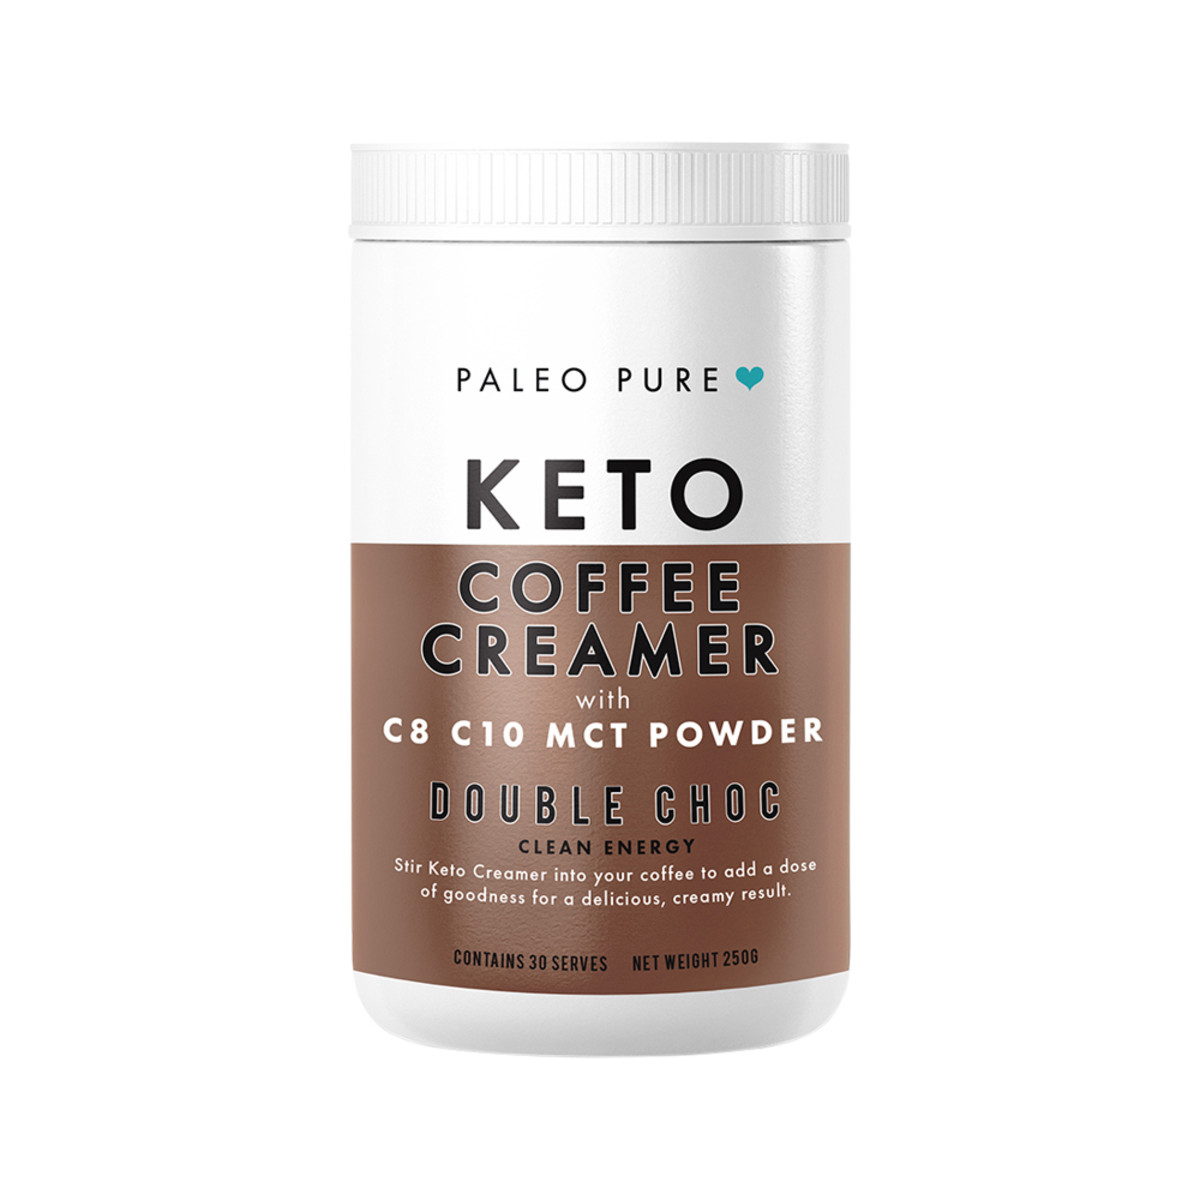 PALEO PURE - Keto Coffee Creamer with C8 C10 MCT Powder Double Choc